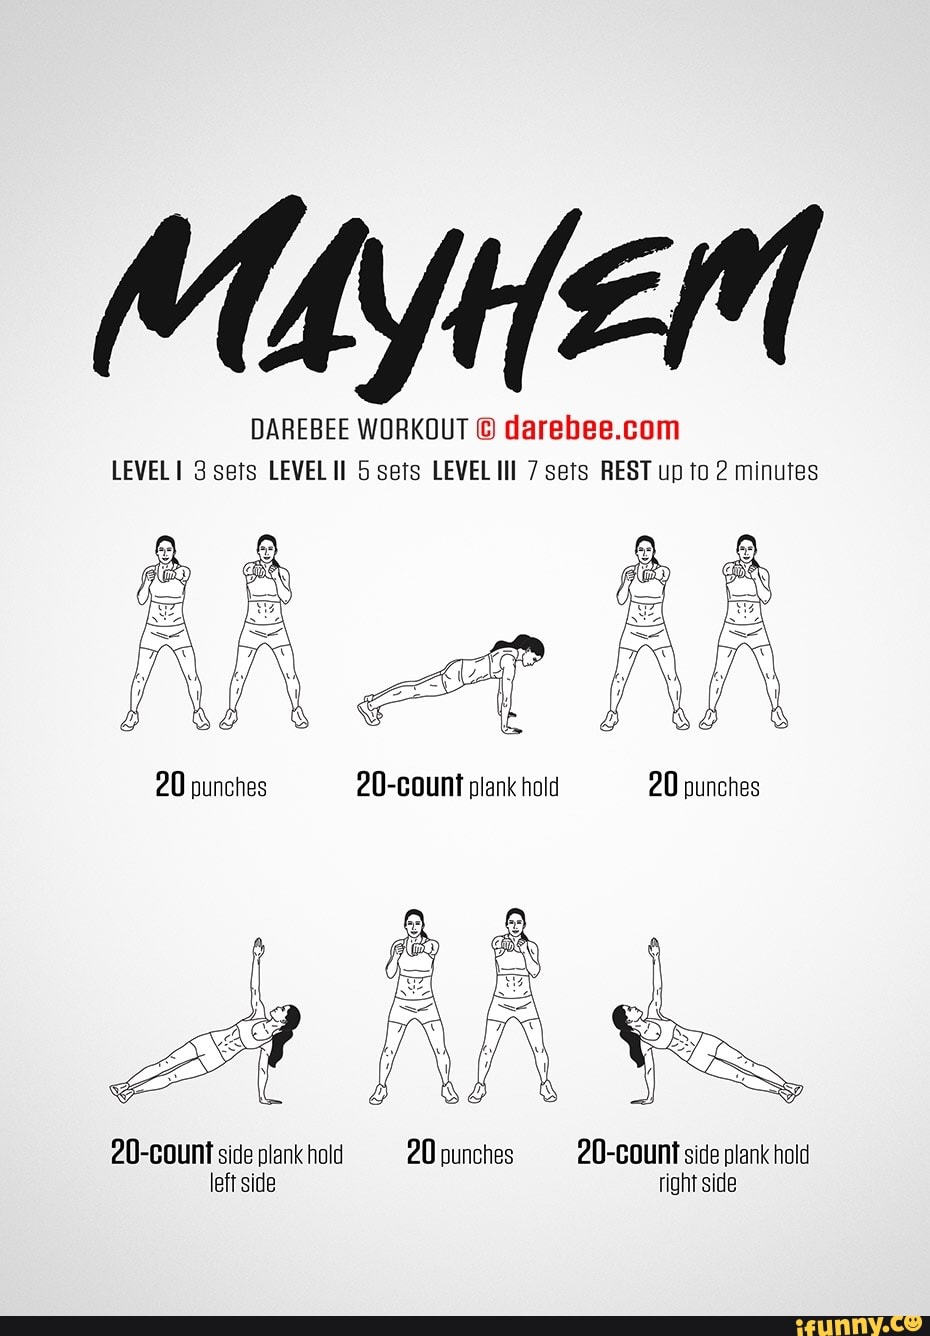 Muyhem Darebee Workout Level 3 Sets